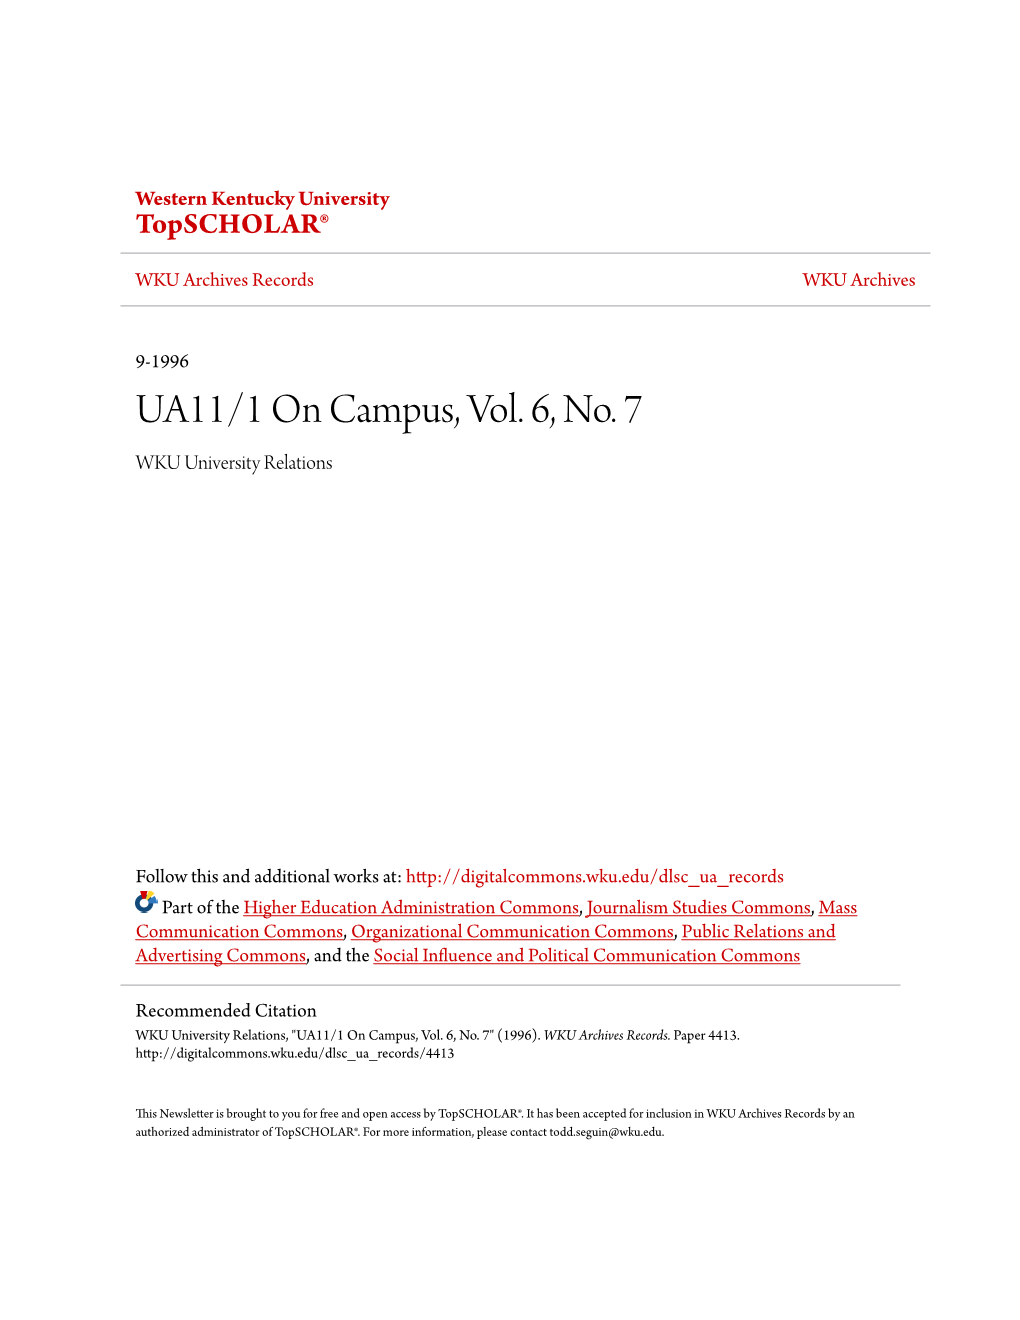 UA11/1 on Campus, Vol. 6, No. 7 WKU University Relations